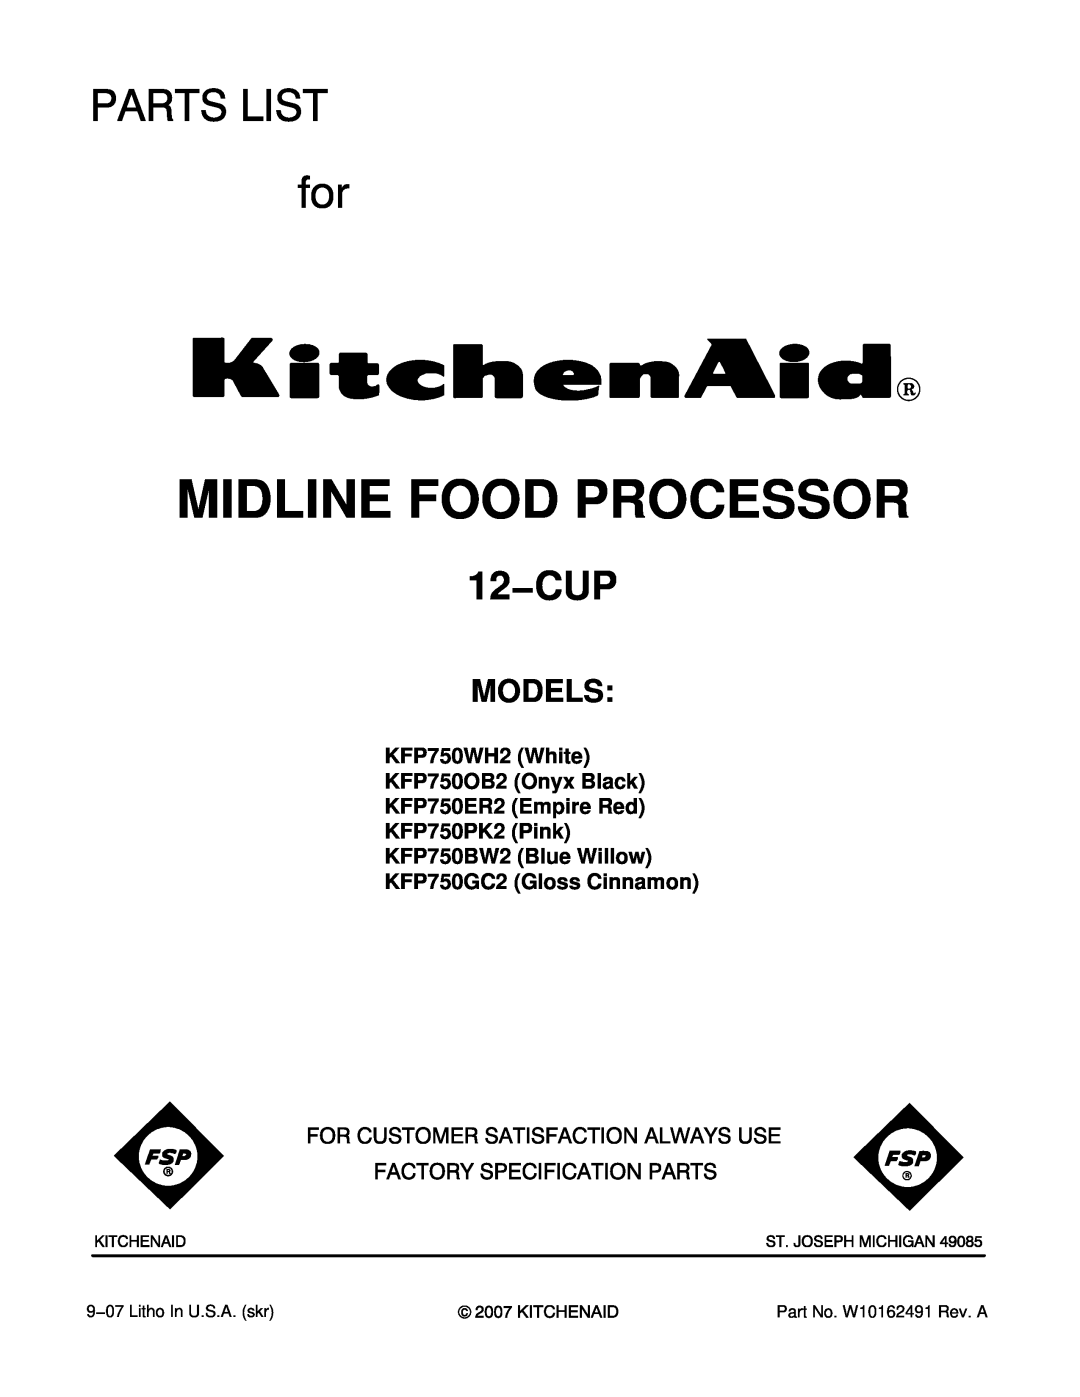 KitchenAid KFP750PK2 manual Models, KFP750WH2 White KFP750OB2 Onyx Black KFP750ER2 Empire Red, Midline Food Processor 